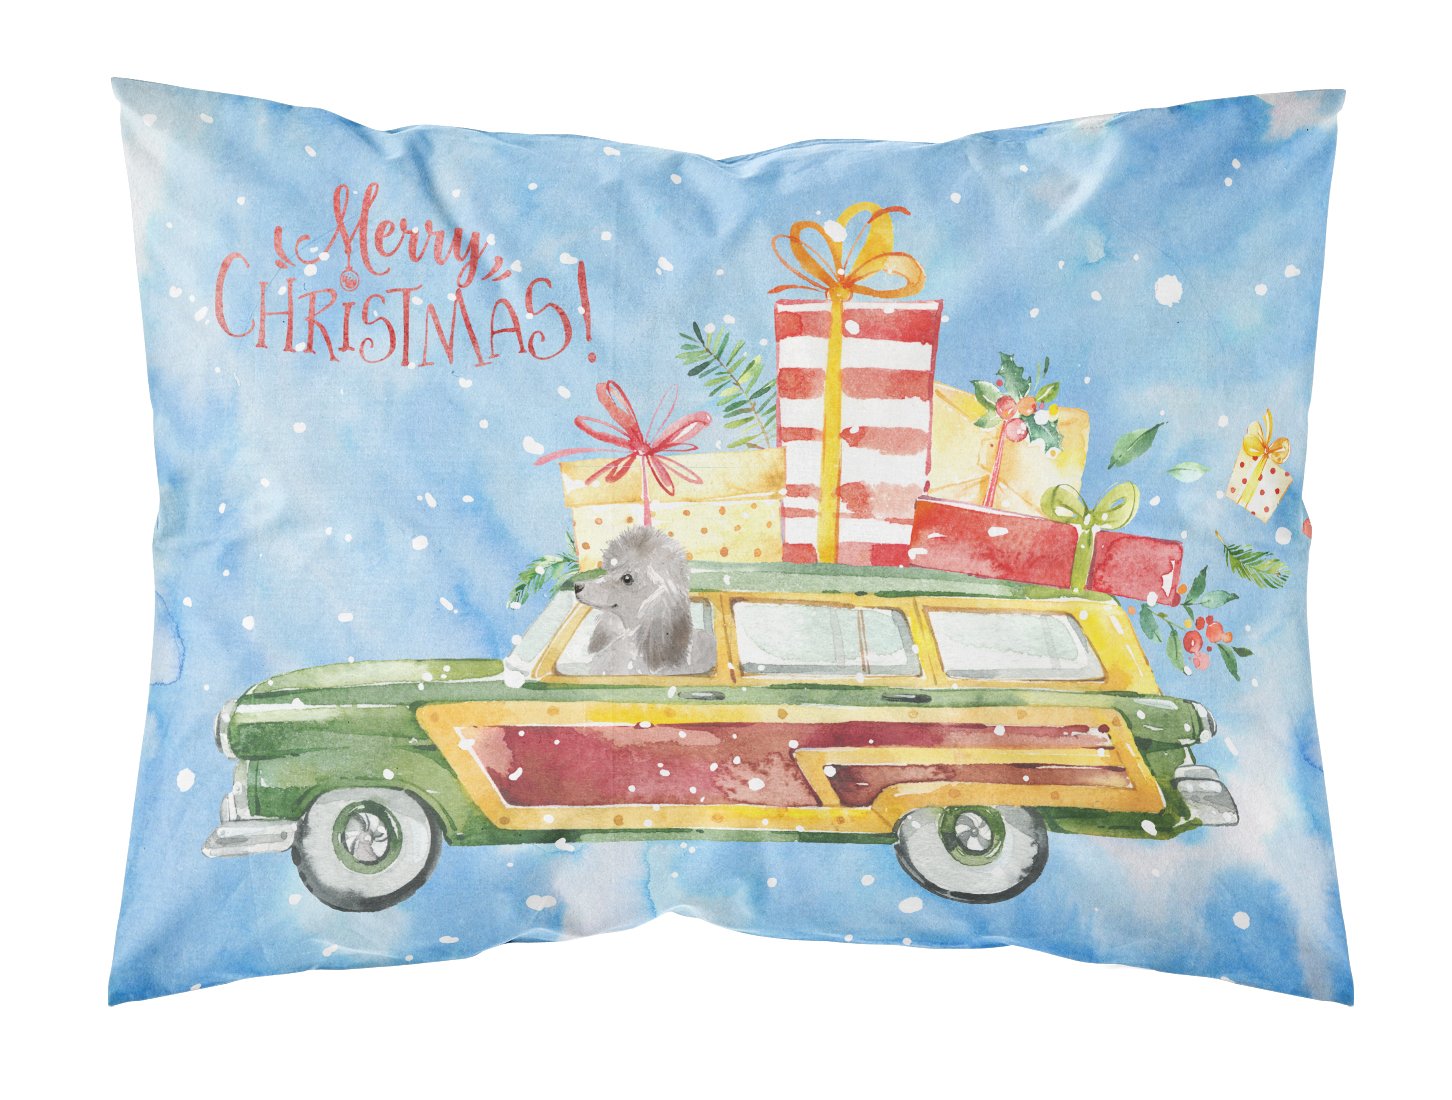 Merry Christmas Silver Poodle Fabric Standard Pillowcase CK2457PILLOWCASE by Caroline's Treasures